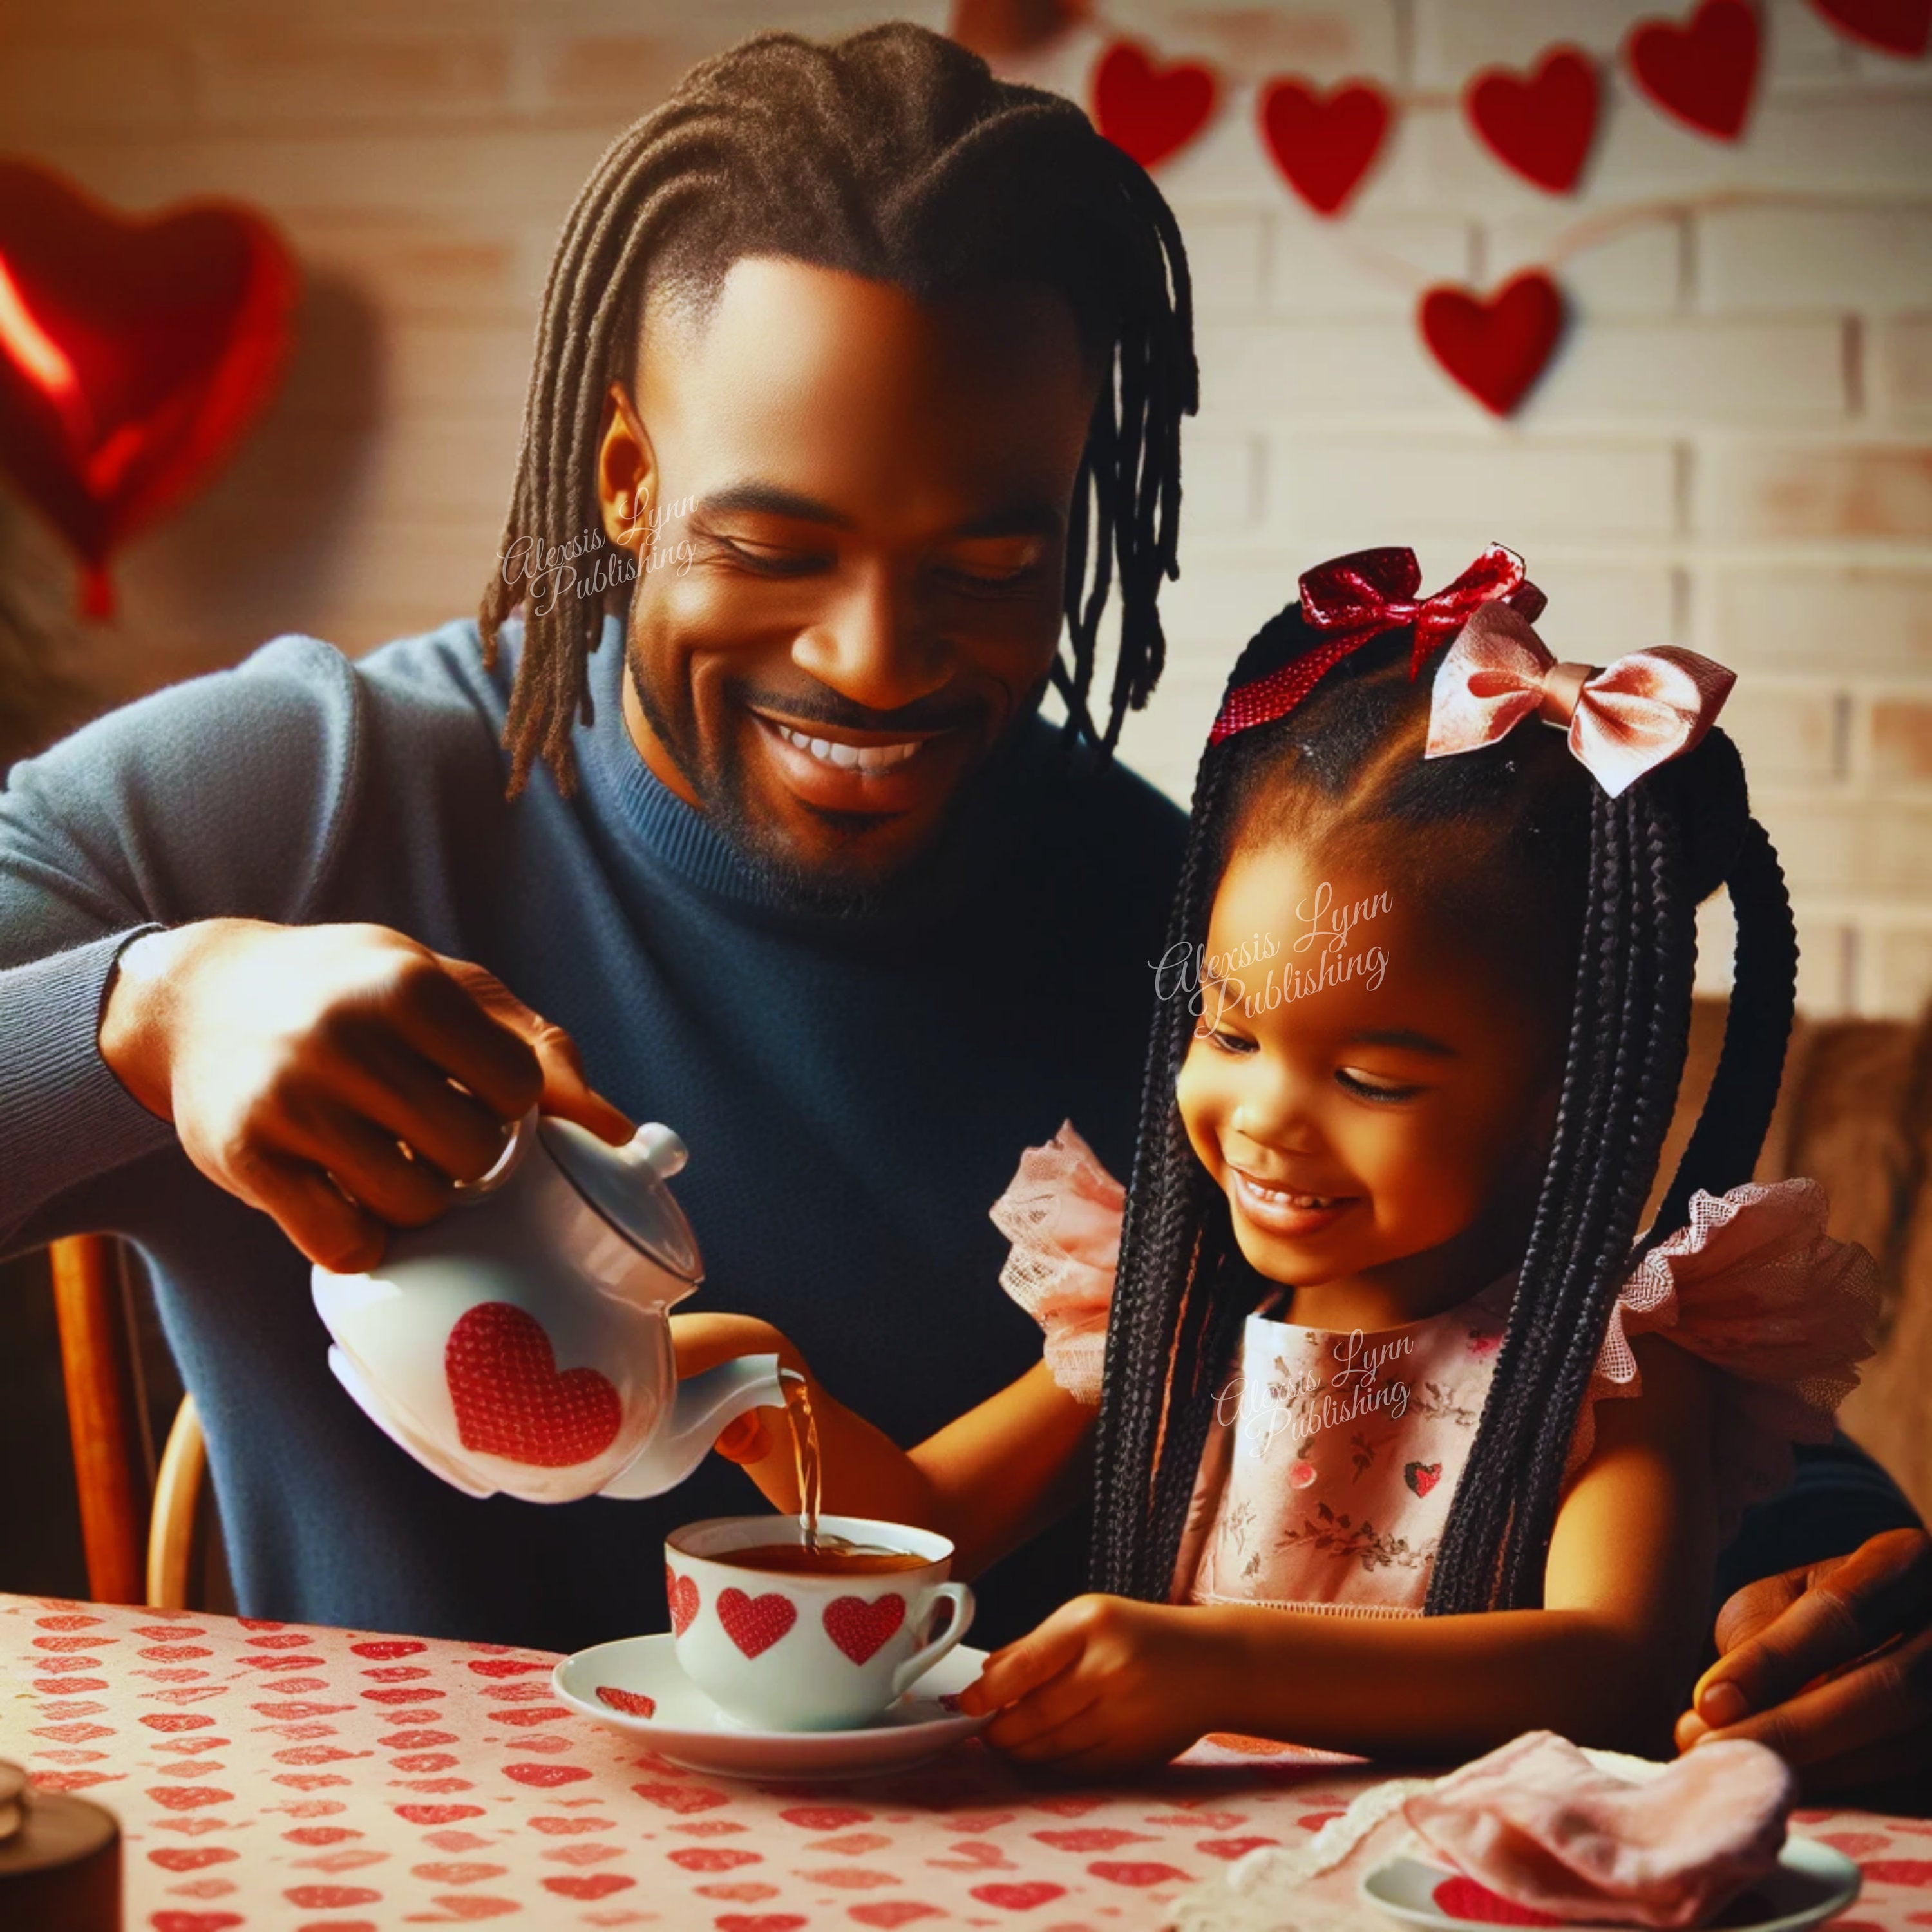 Daddy-Daughter Moment Art Print , African American Family Illustration , KDP Journal Reflection Poster, Modern Home Decor, Digital Artwork, Valentine’s Day